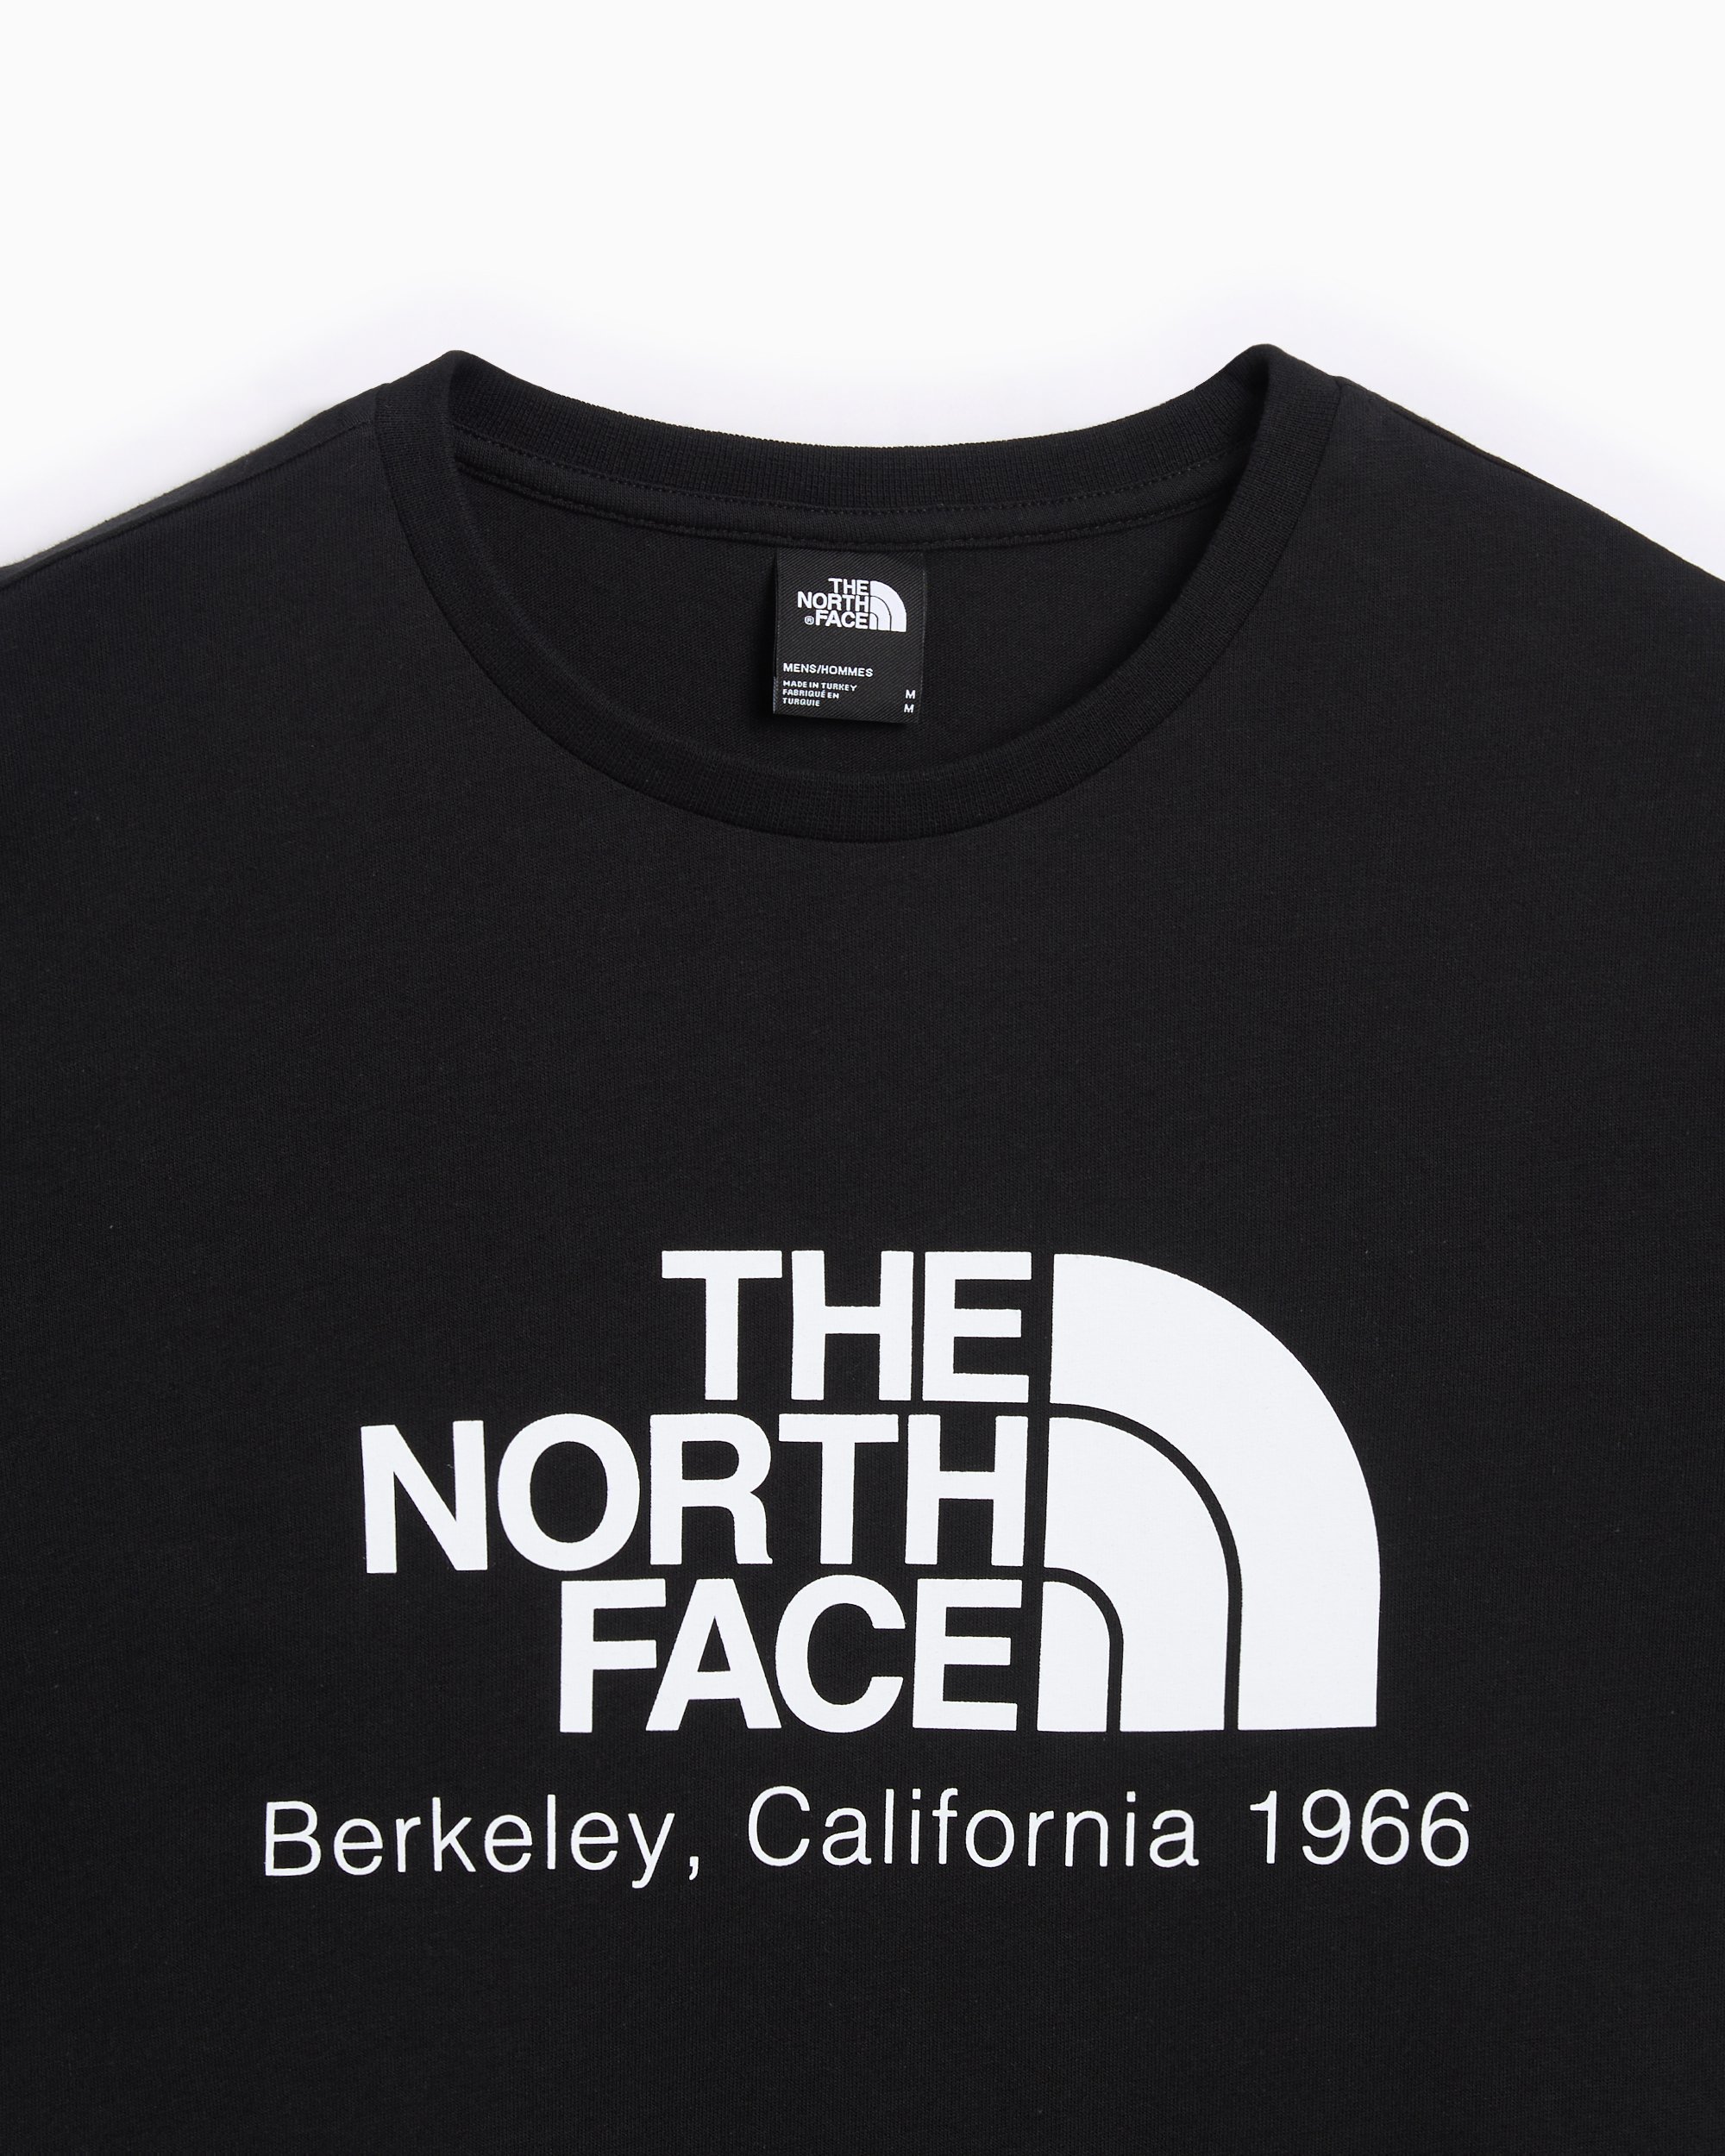 The North Face Berkeley California Men's T-Shirt Black